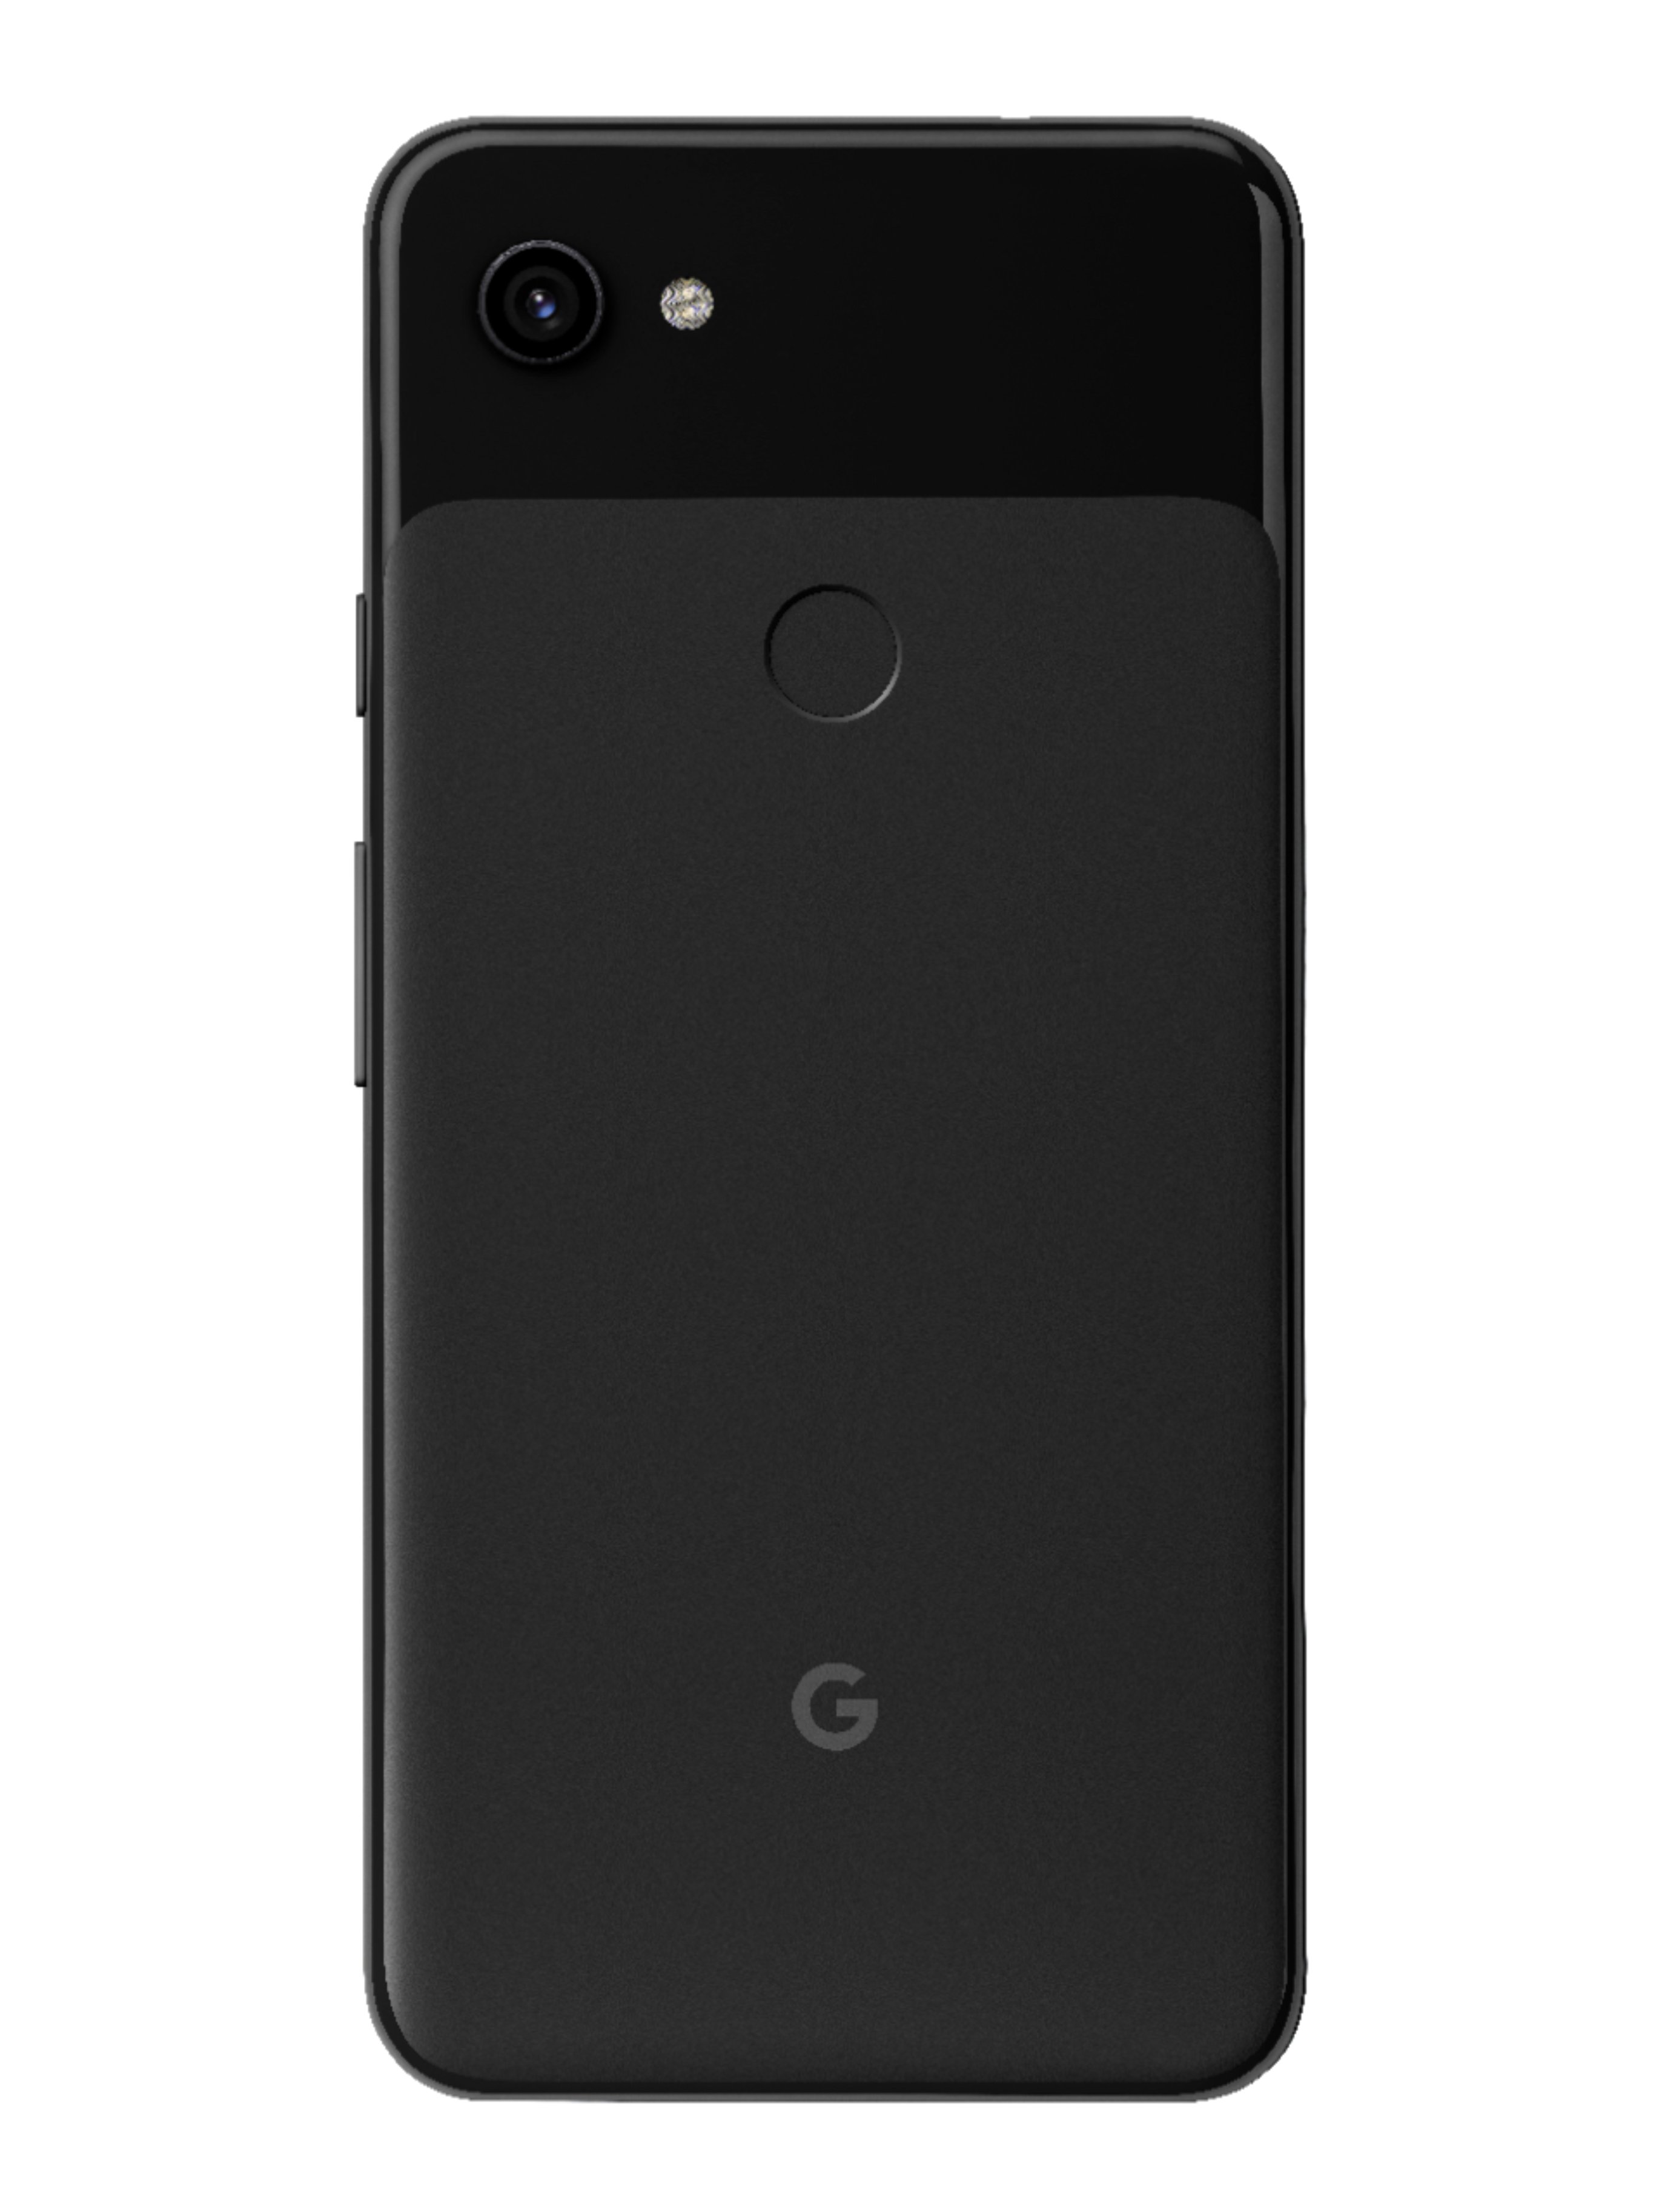 Google Pixel 3a XL- 64GB (Unlocked) Just Black GA00664-US - Best Buy